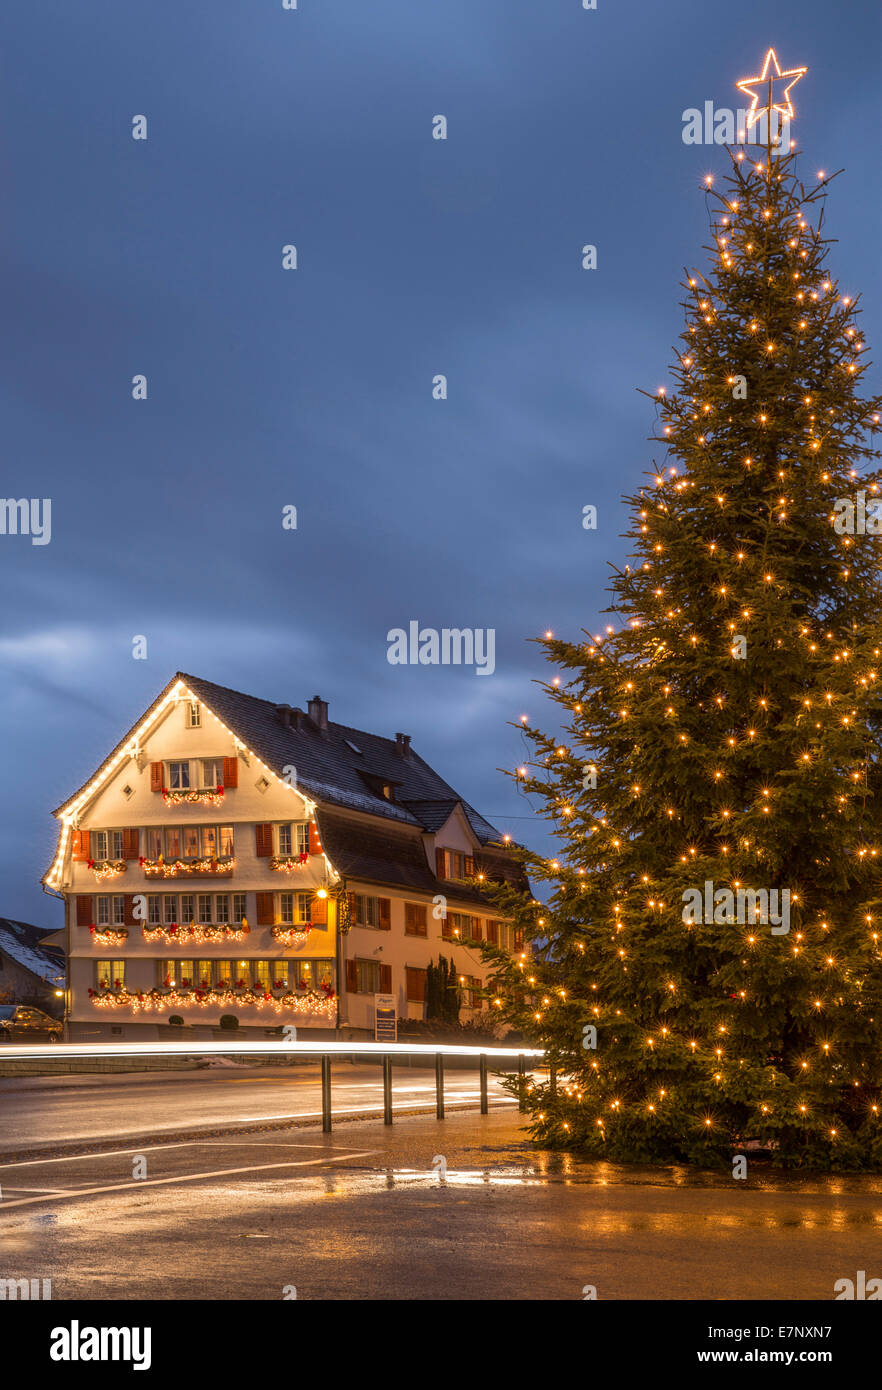 Town, City, Christmas lighting, Mörschwil, Christmas, Advent, town, city, SG, canton St. Gallen, Switzerland, Europe, Stock Photo